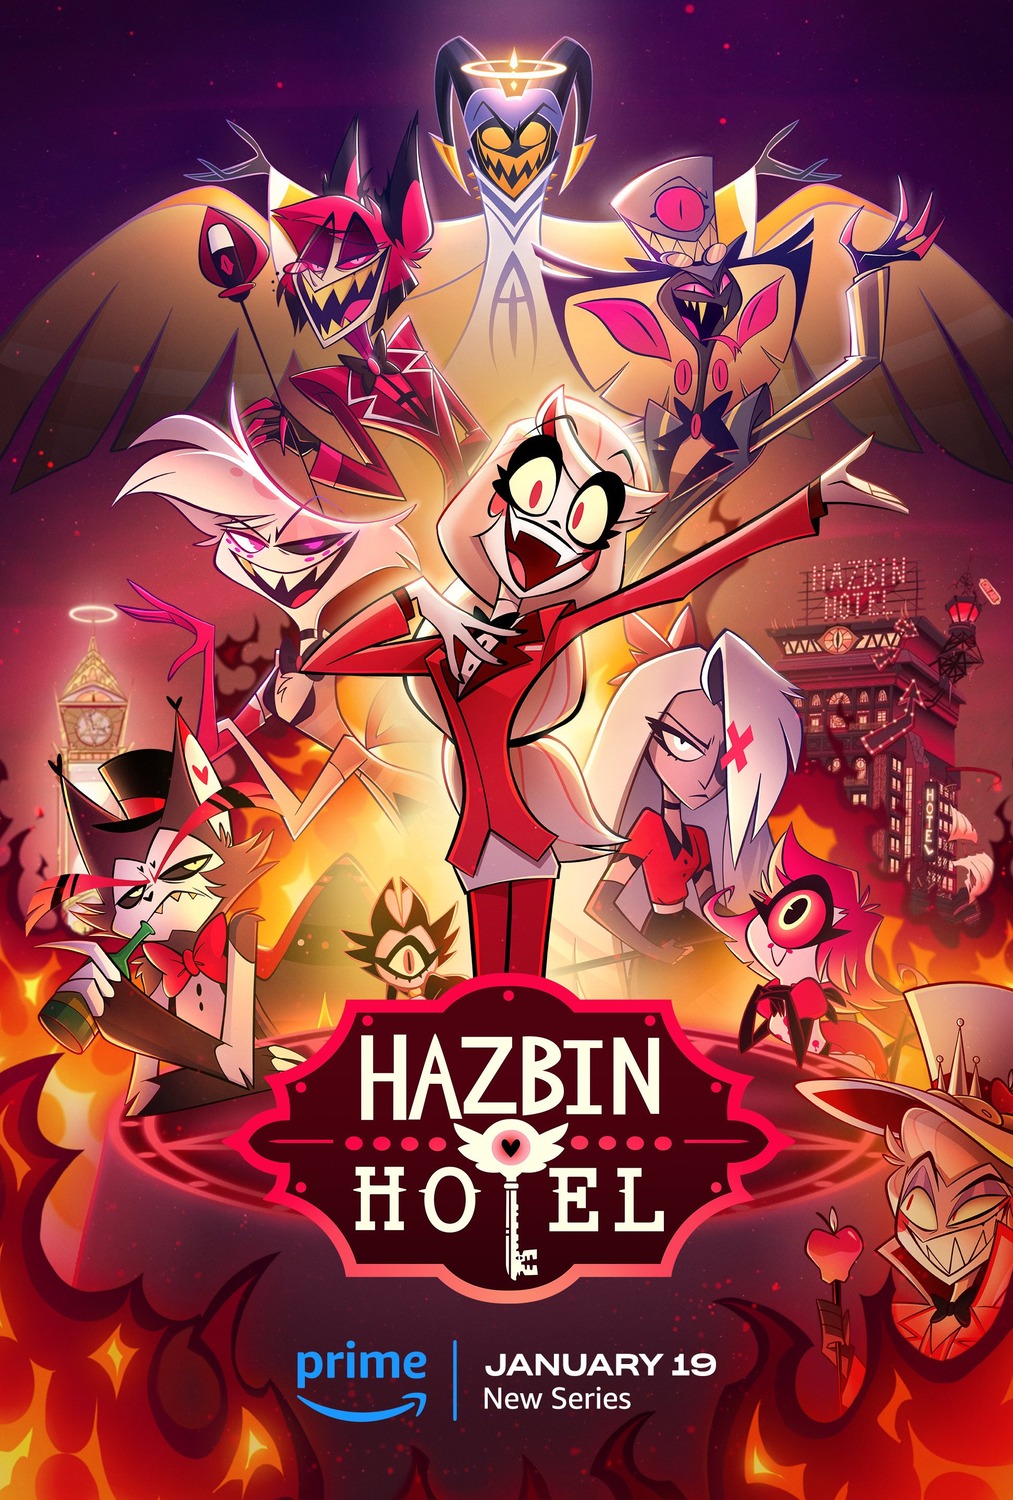 Extra Large TV Poster Image for Hazbin Hotel (#2 of 2)